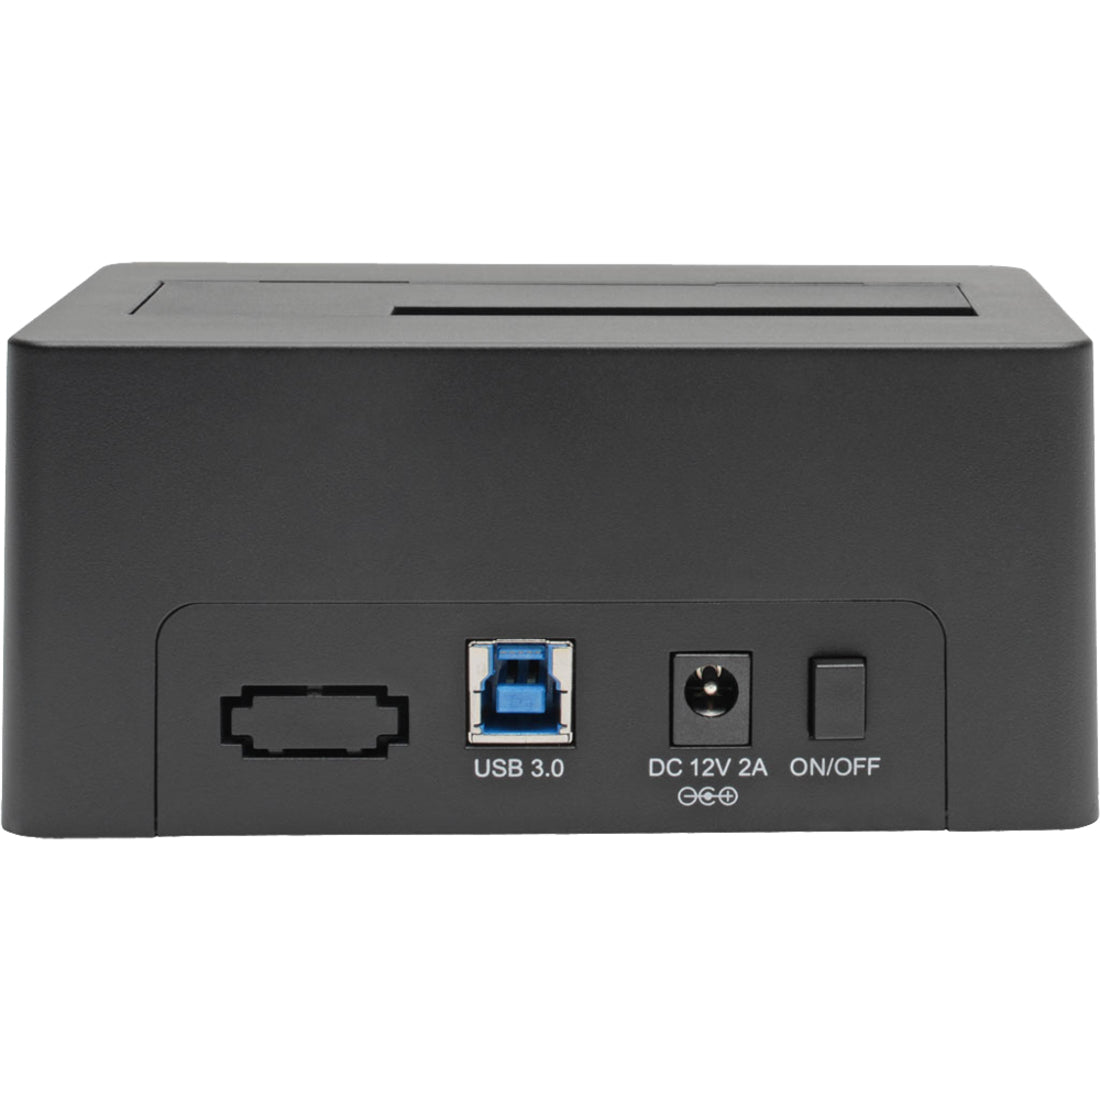 Tripp Lite U339-000 Quick Dock USB3.0 to SATA Hard Drive Quick Dock, External Drive Cabinet